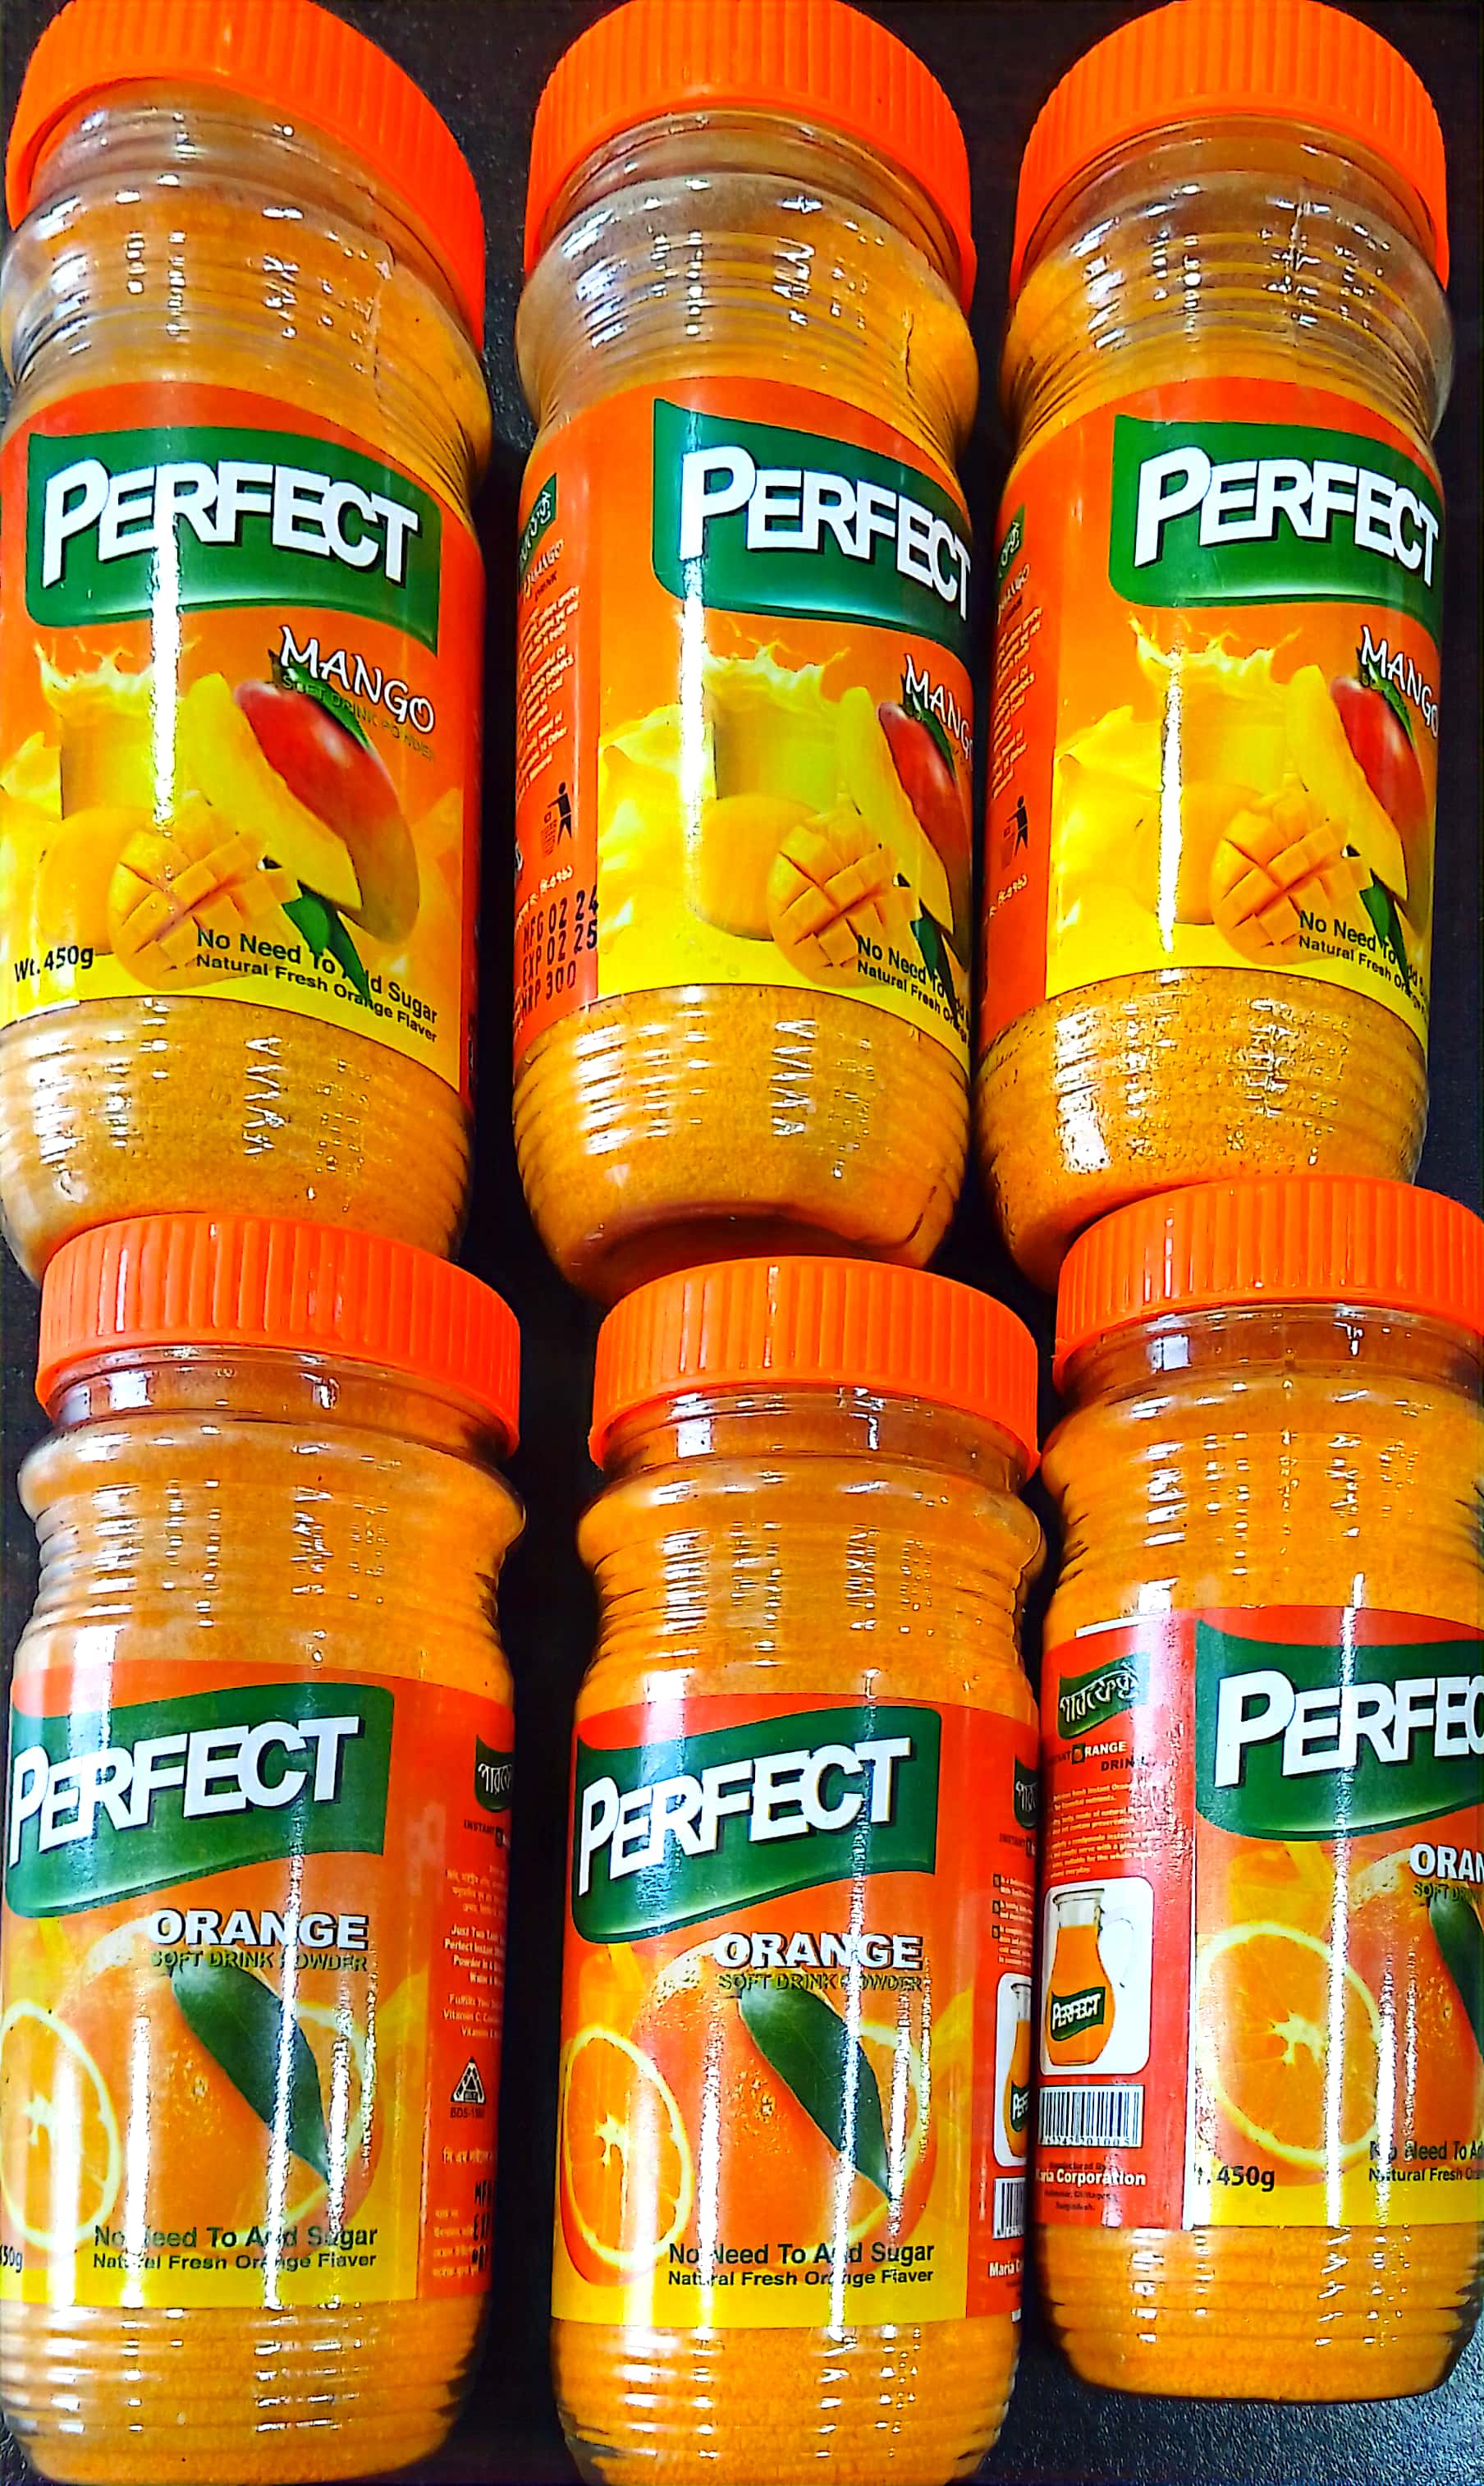 PERFECT Mango Drinks powder